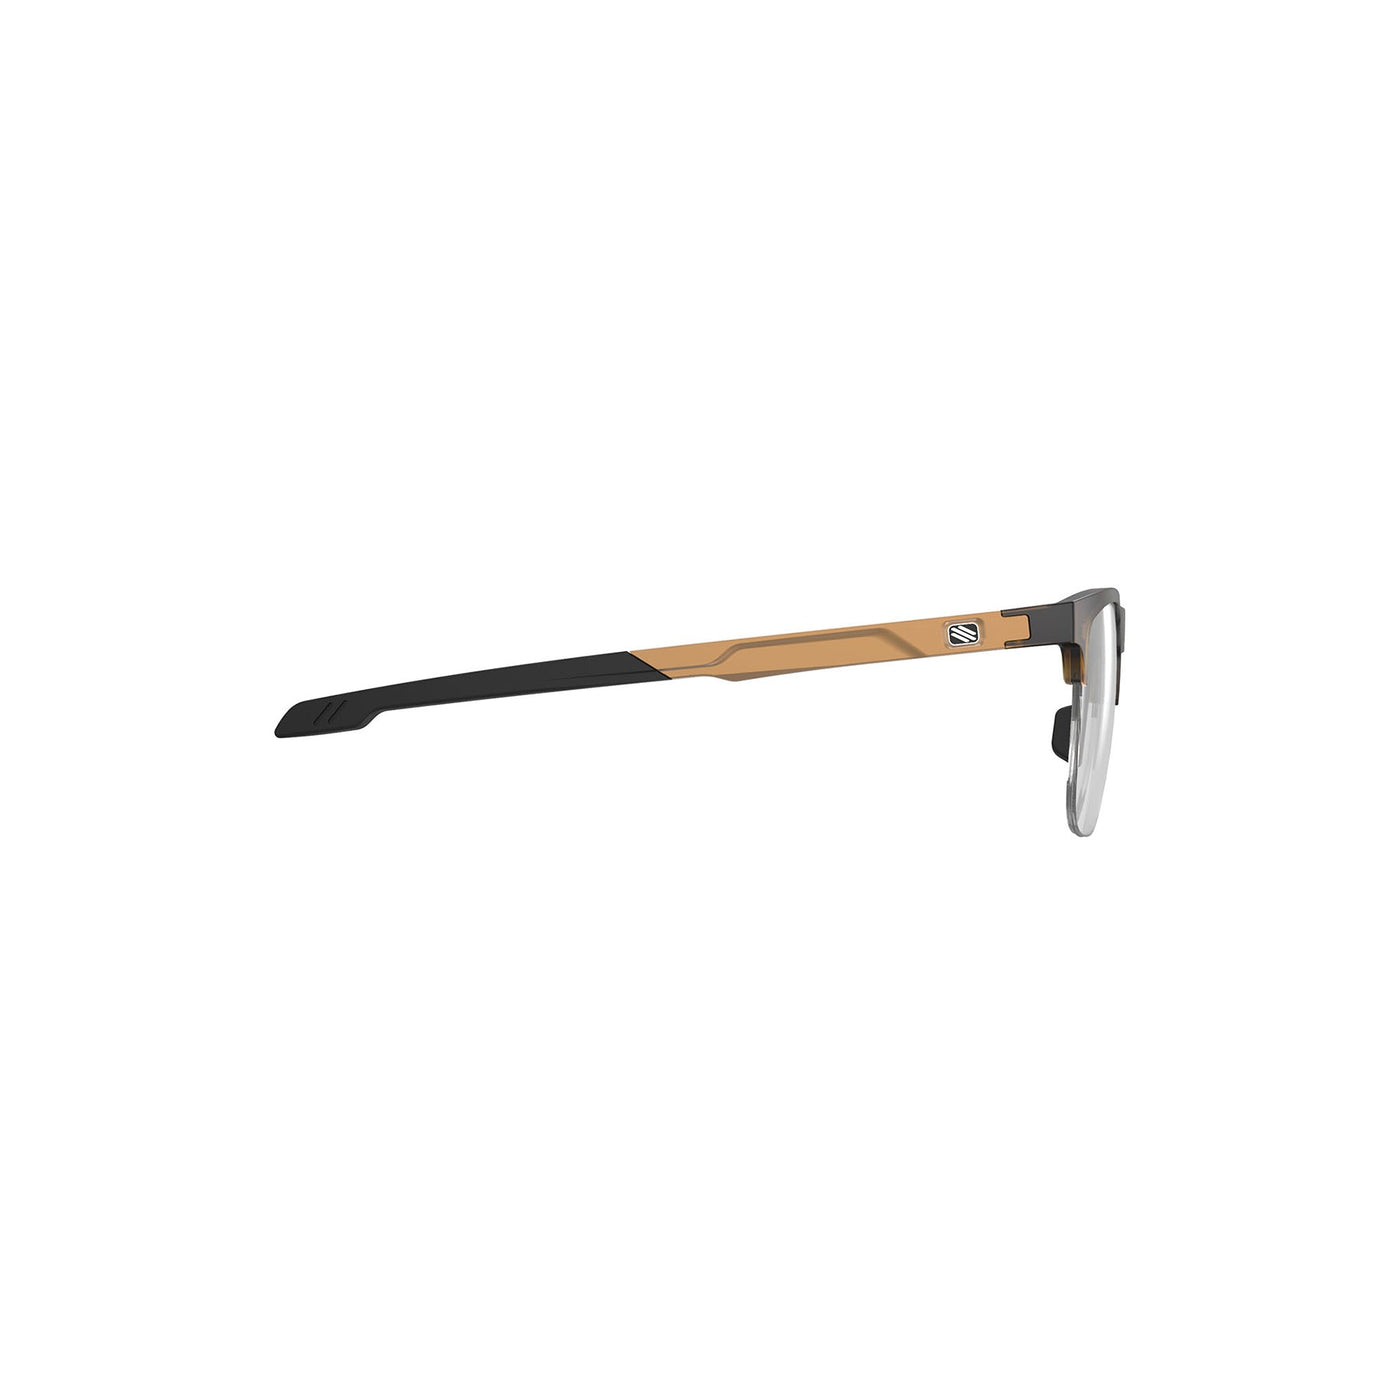 Rudy Project ophthalmic prescription eyeglass frames#color_inkas-xl-half-rim-shape-b-demi-turtle-gloss